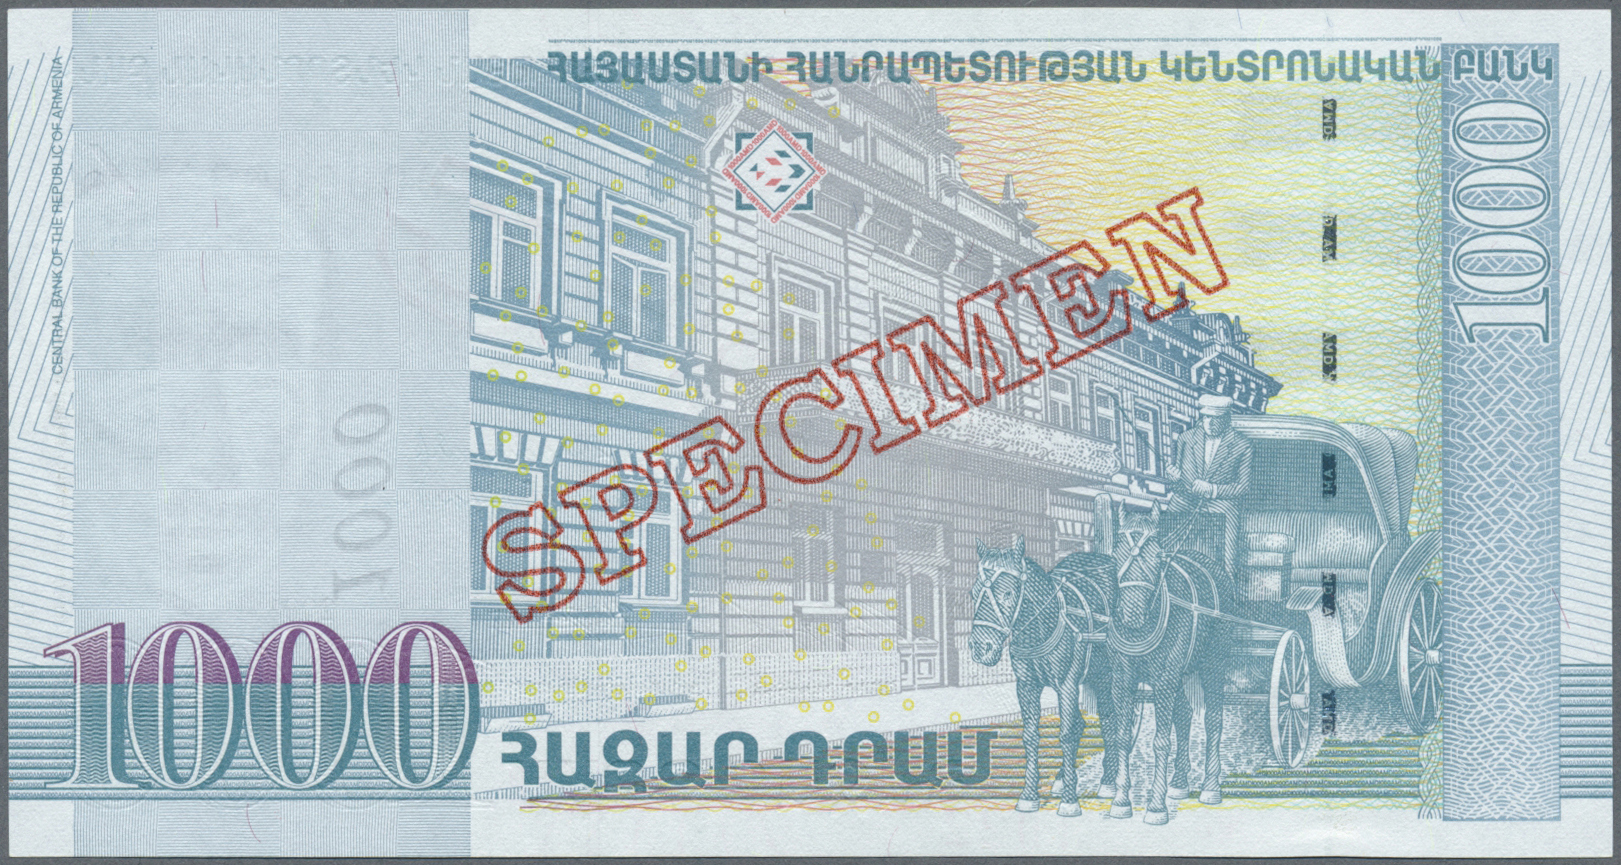 00049 Armenia / Armenien: Central Bank Of The Republic Of Armenia 1000 Dram 2001 SPECIMEN, P.50s, With Red Overprint "Sp - Armenia